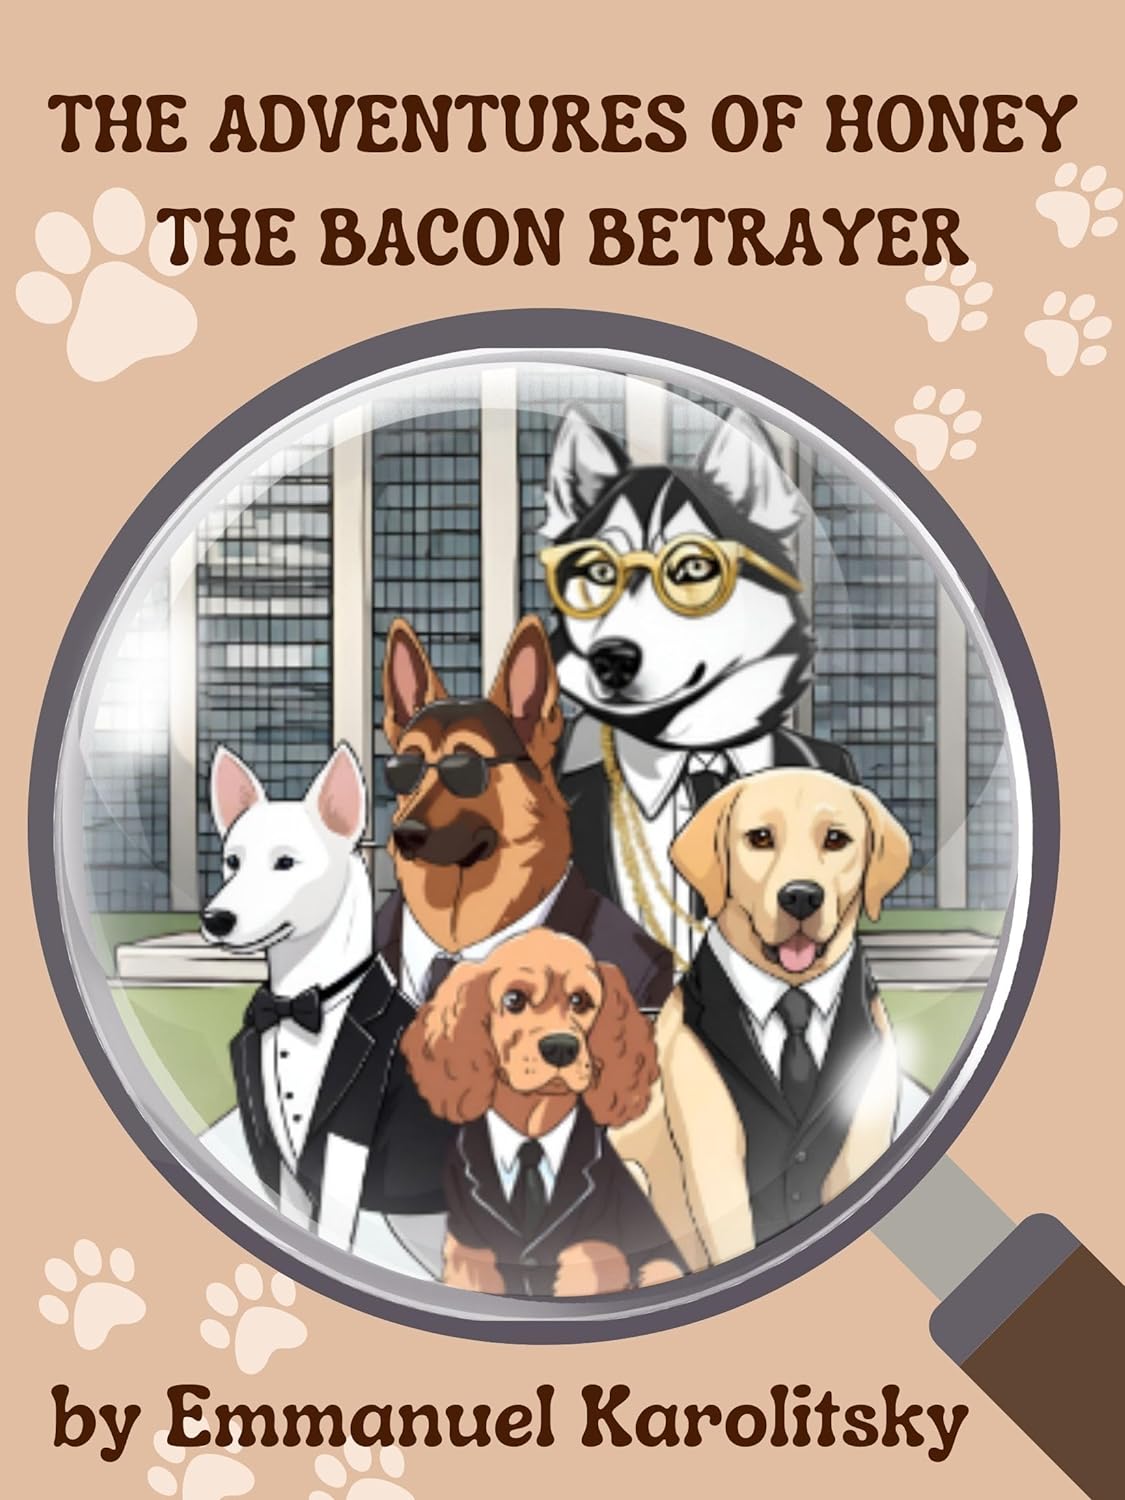 Emmanuel Karolitsky Releases New Children’s Book - The Adventures of Honey: The Bacon Betrayer